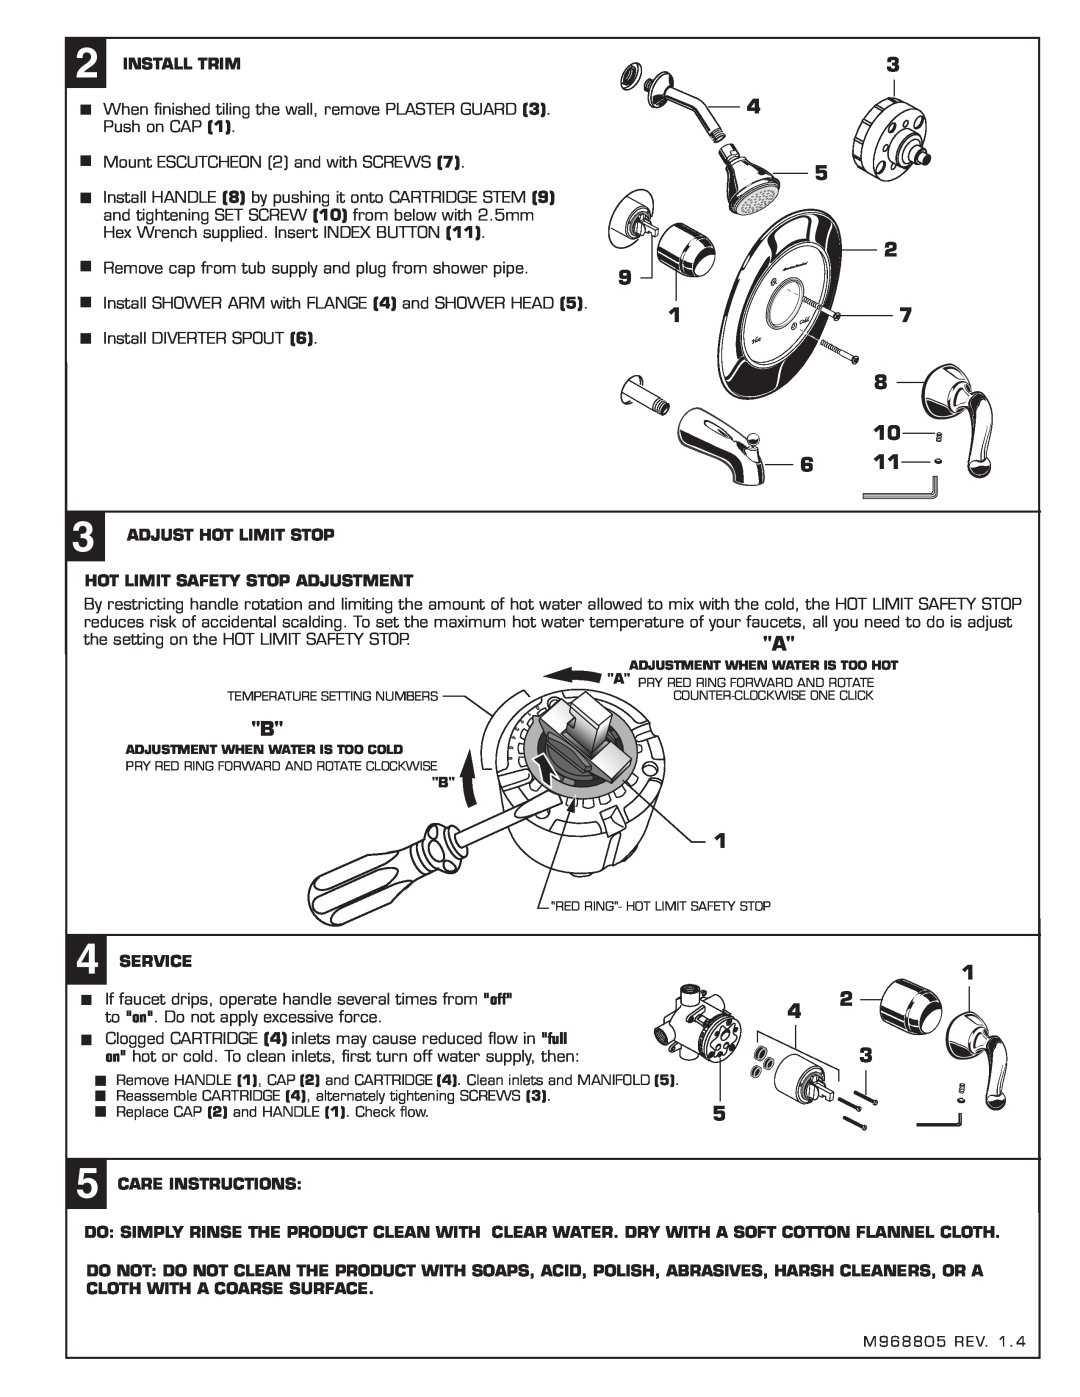 American Standard 4501 installation instructions 